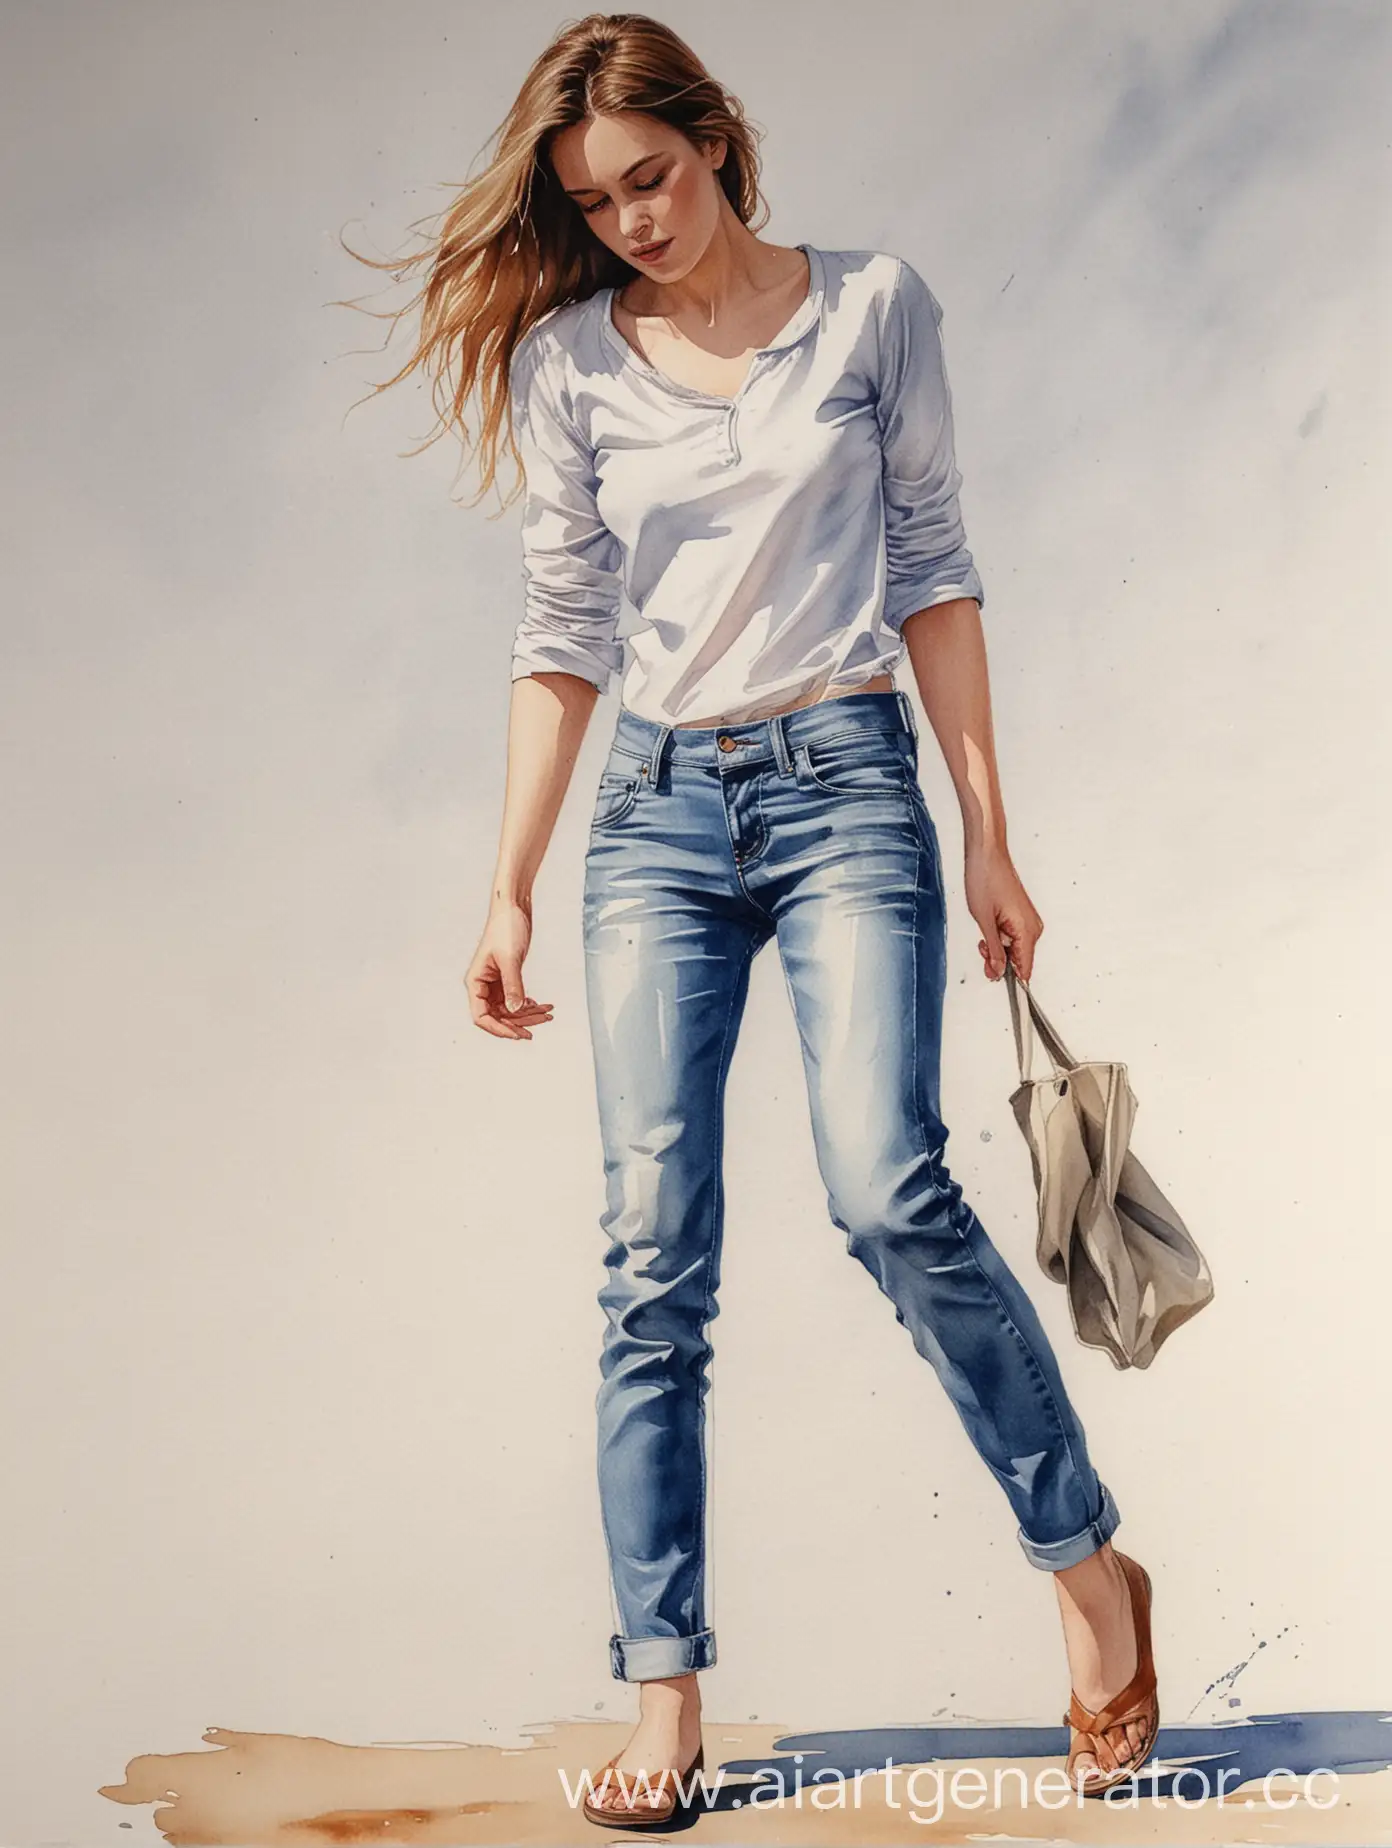 Detailed-Aquarelle-Illustration-Woman-Removing-Jeans